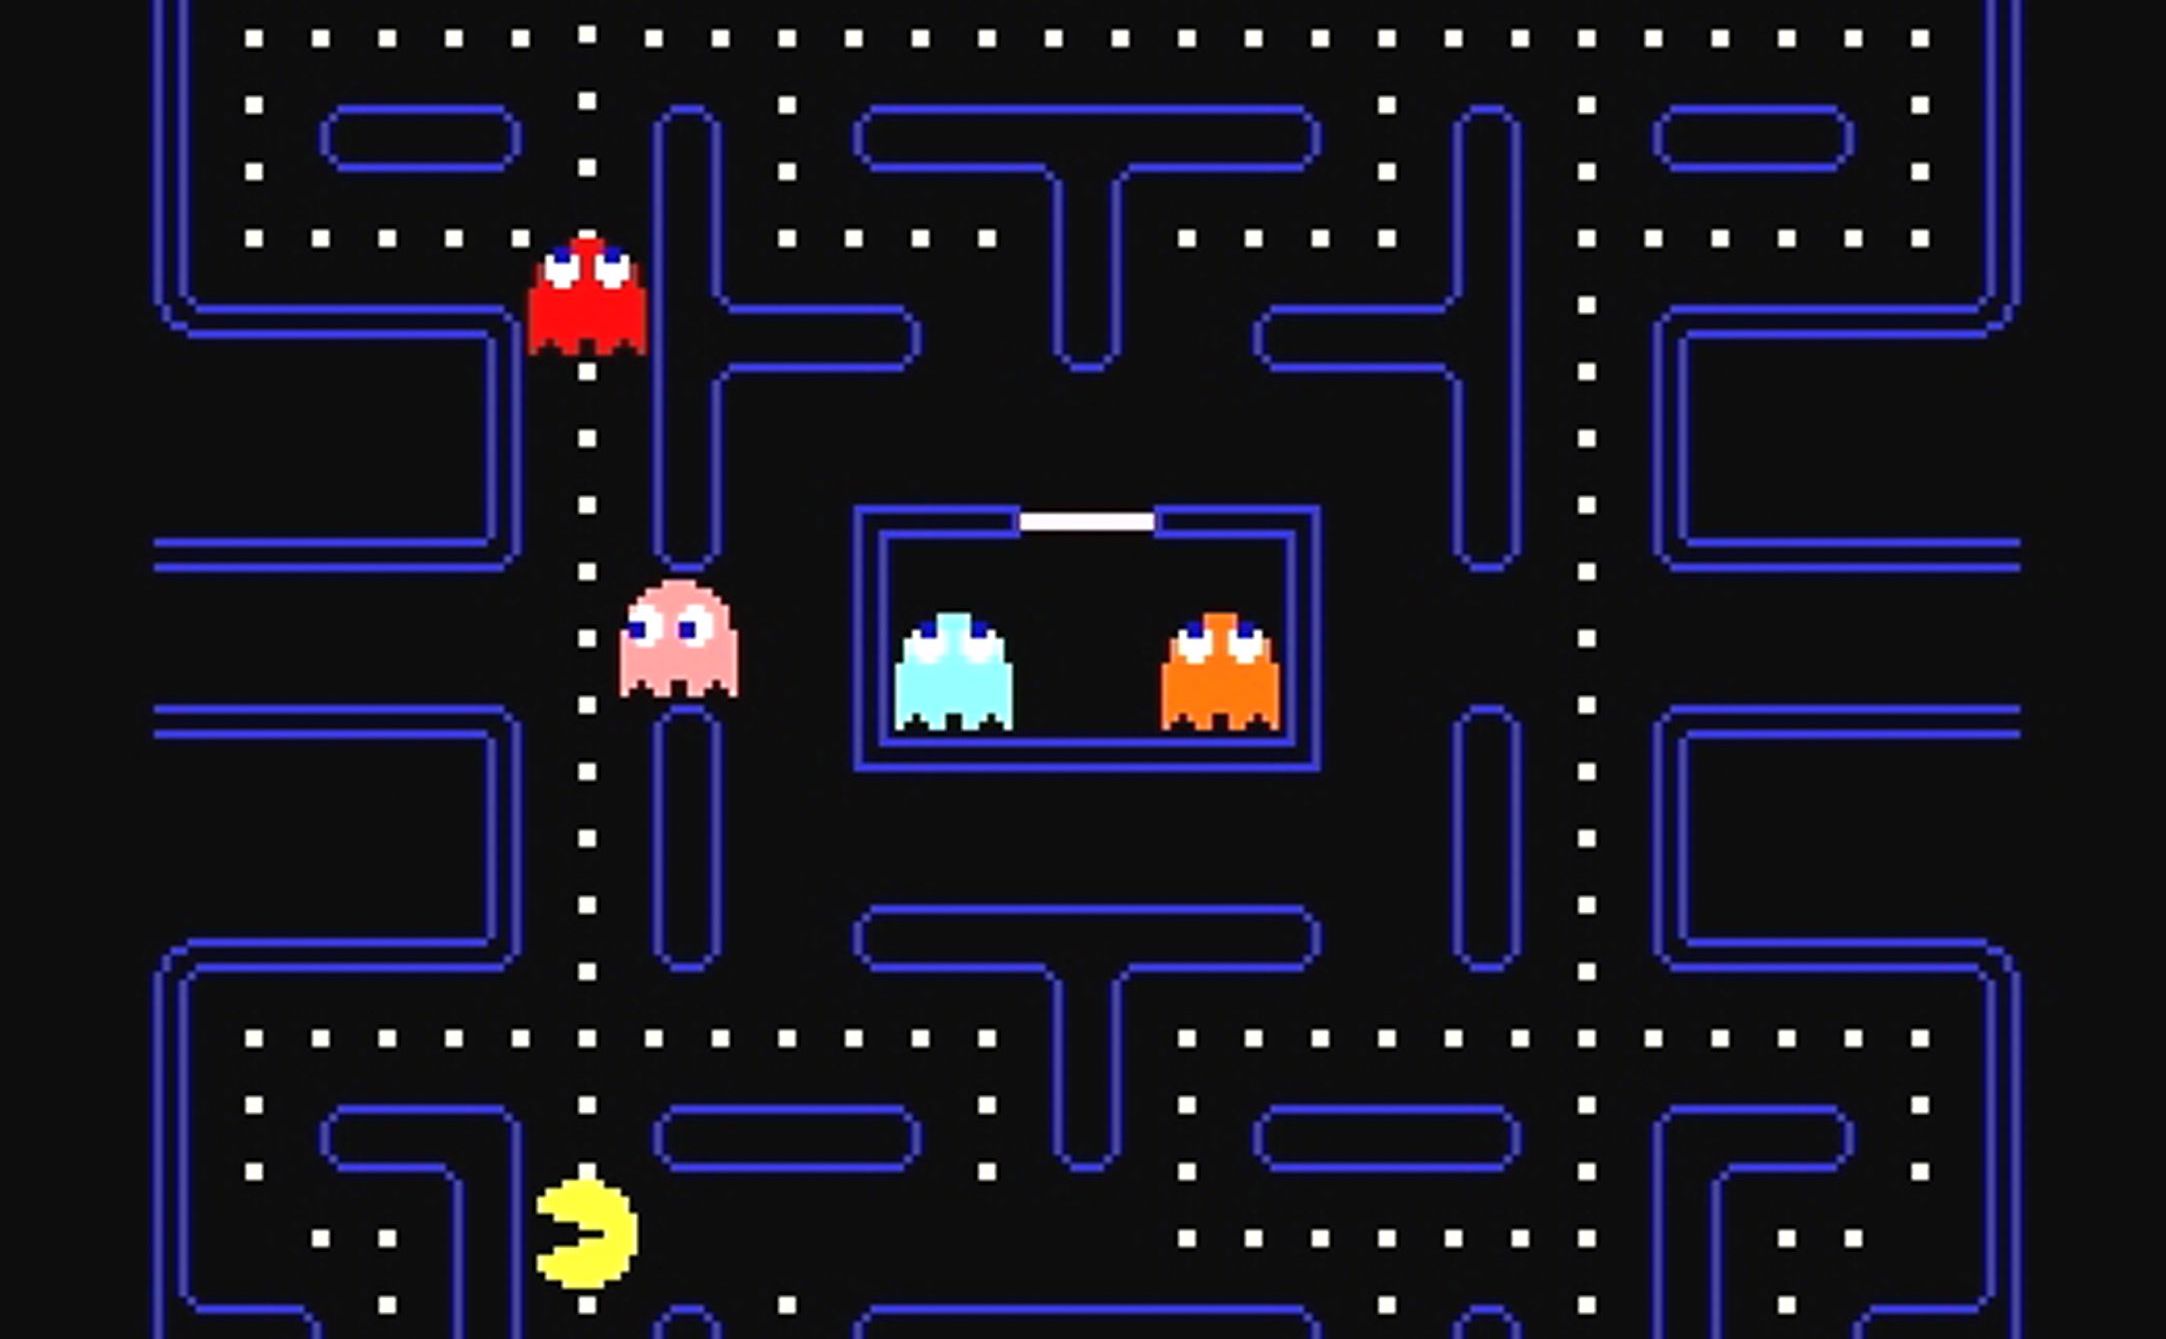 Pacman game. Pacman игра 1980 года. Лабиринт ПАКМАНА. Пакман игра оригинал. Пакман 1980.